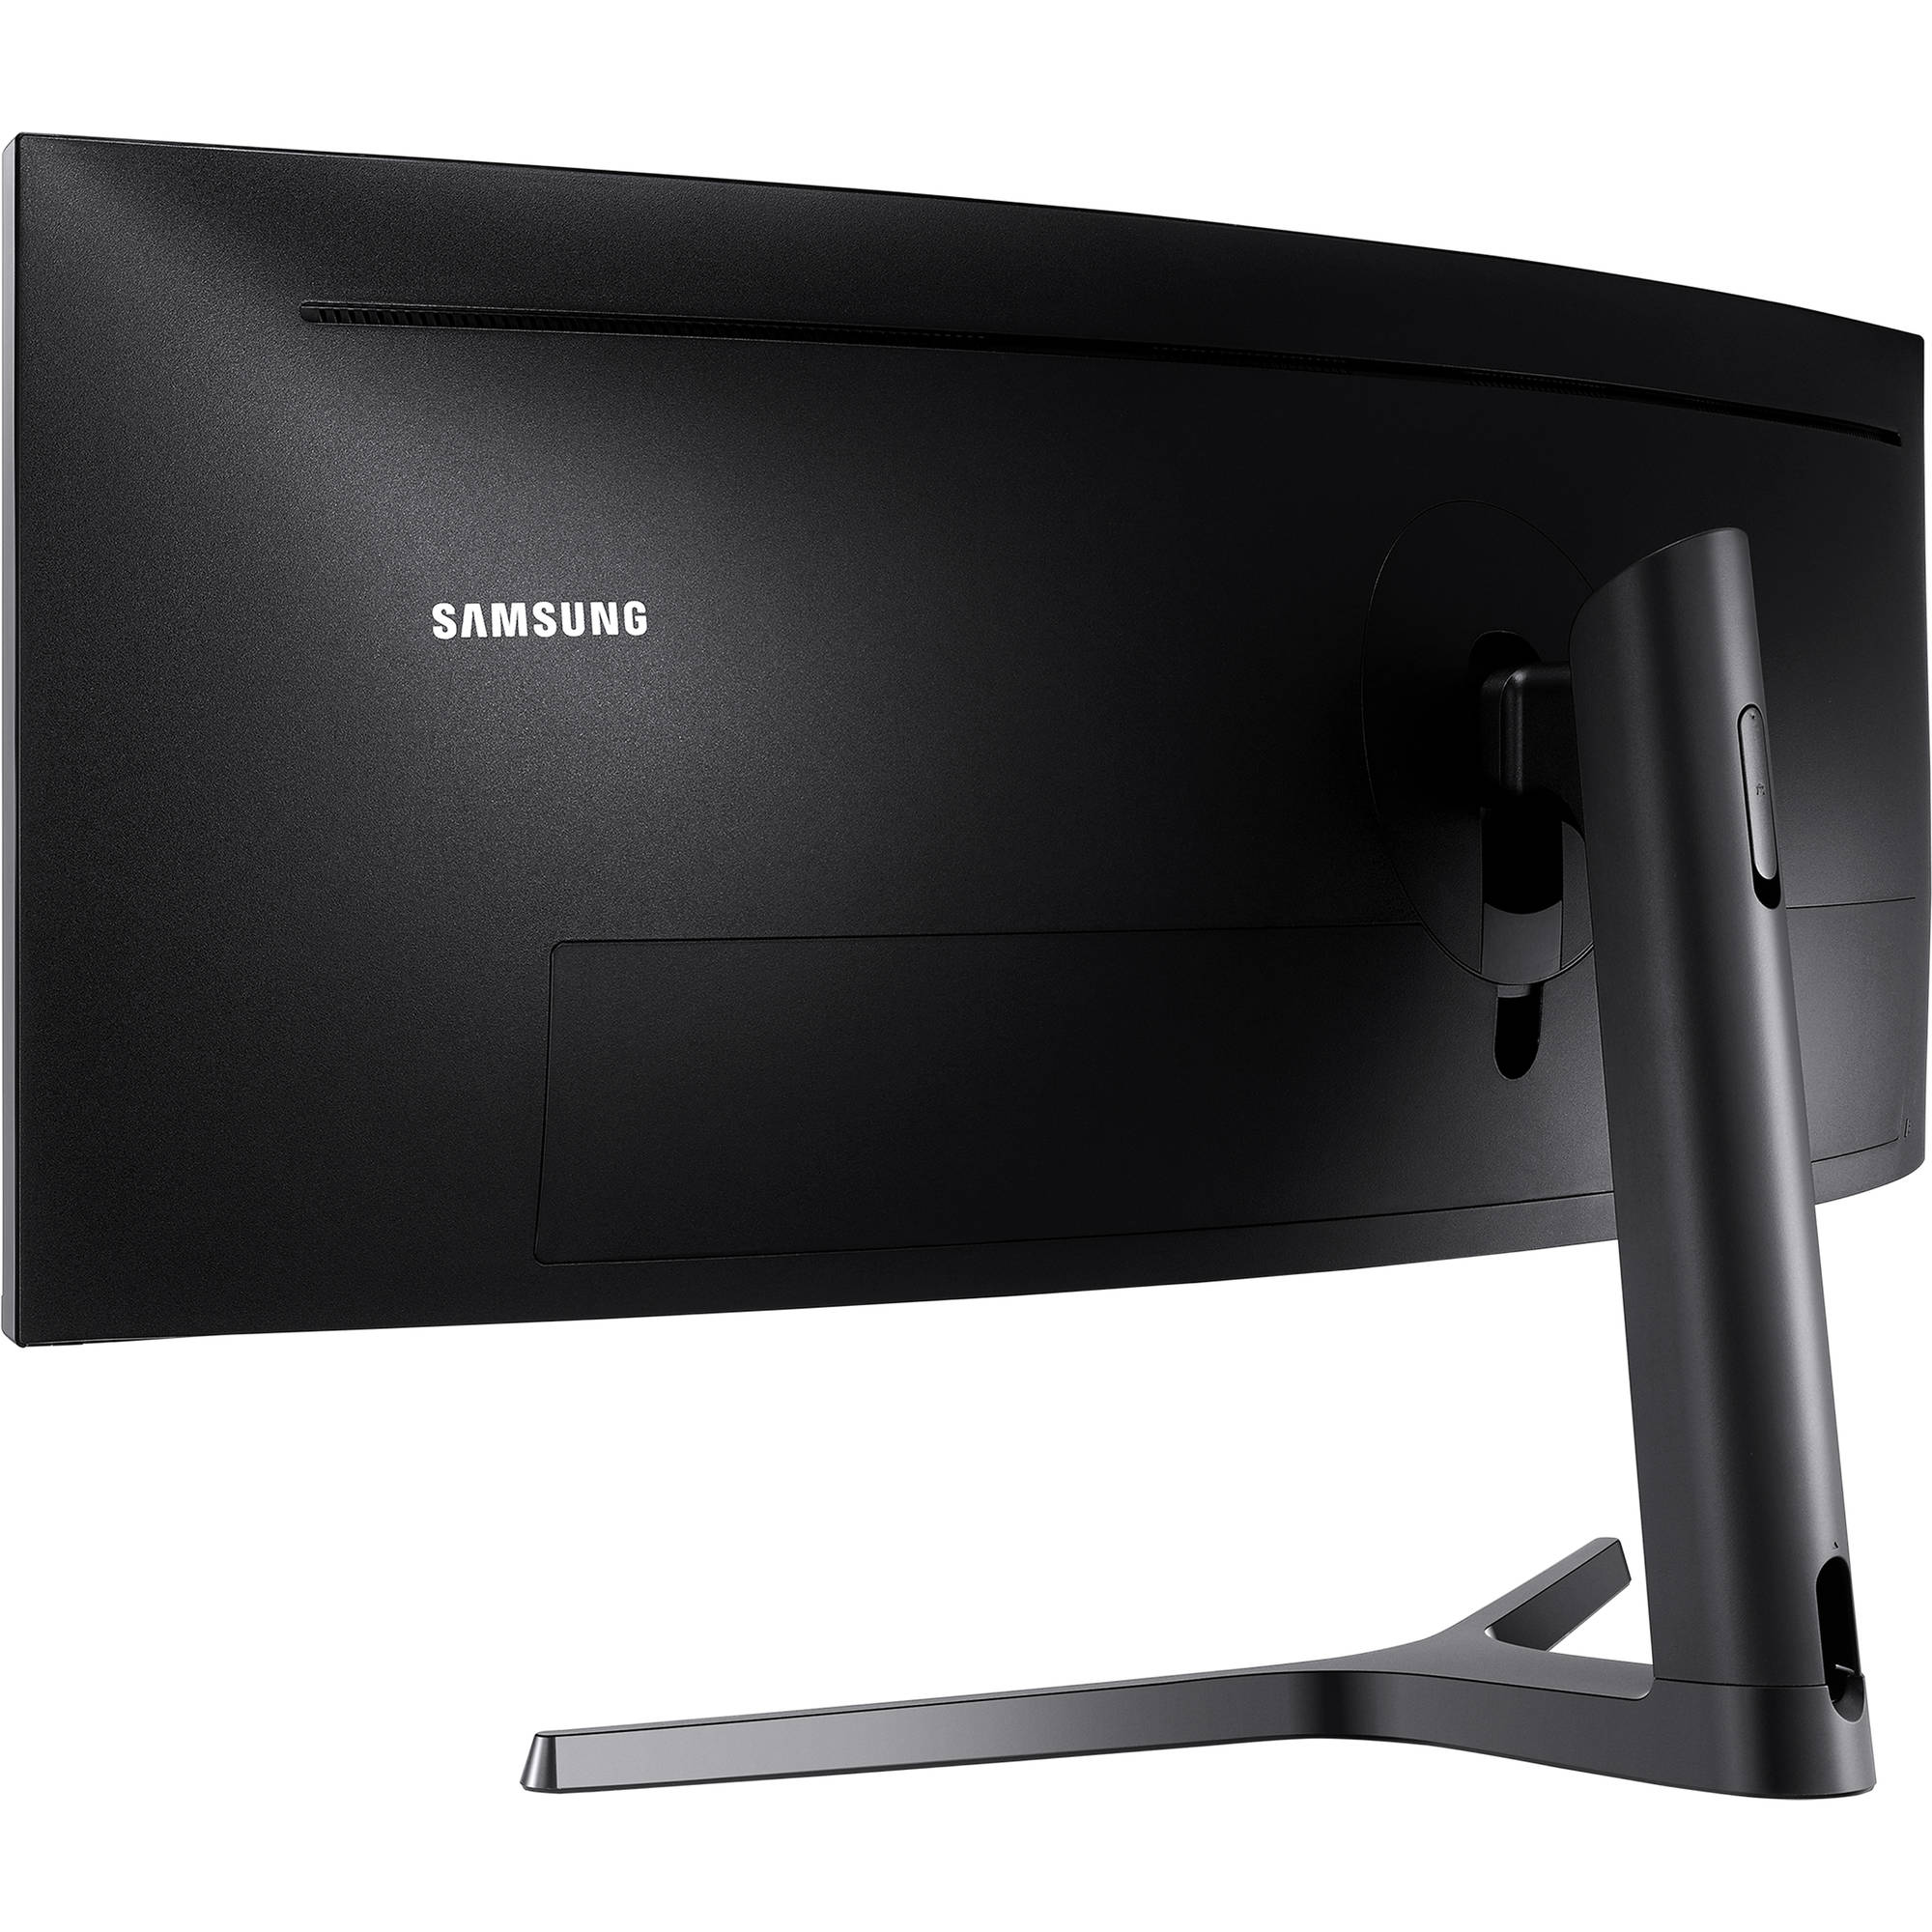 Samsung LC43J890DKNXZA-RB 43" CJ890 Super Ultra-Wide Curved Monitor - Certified Refurbished